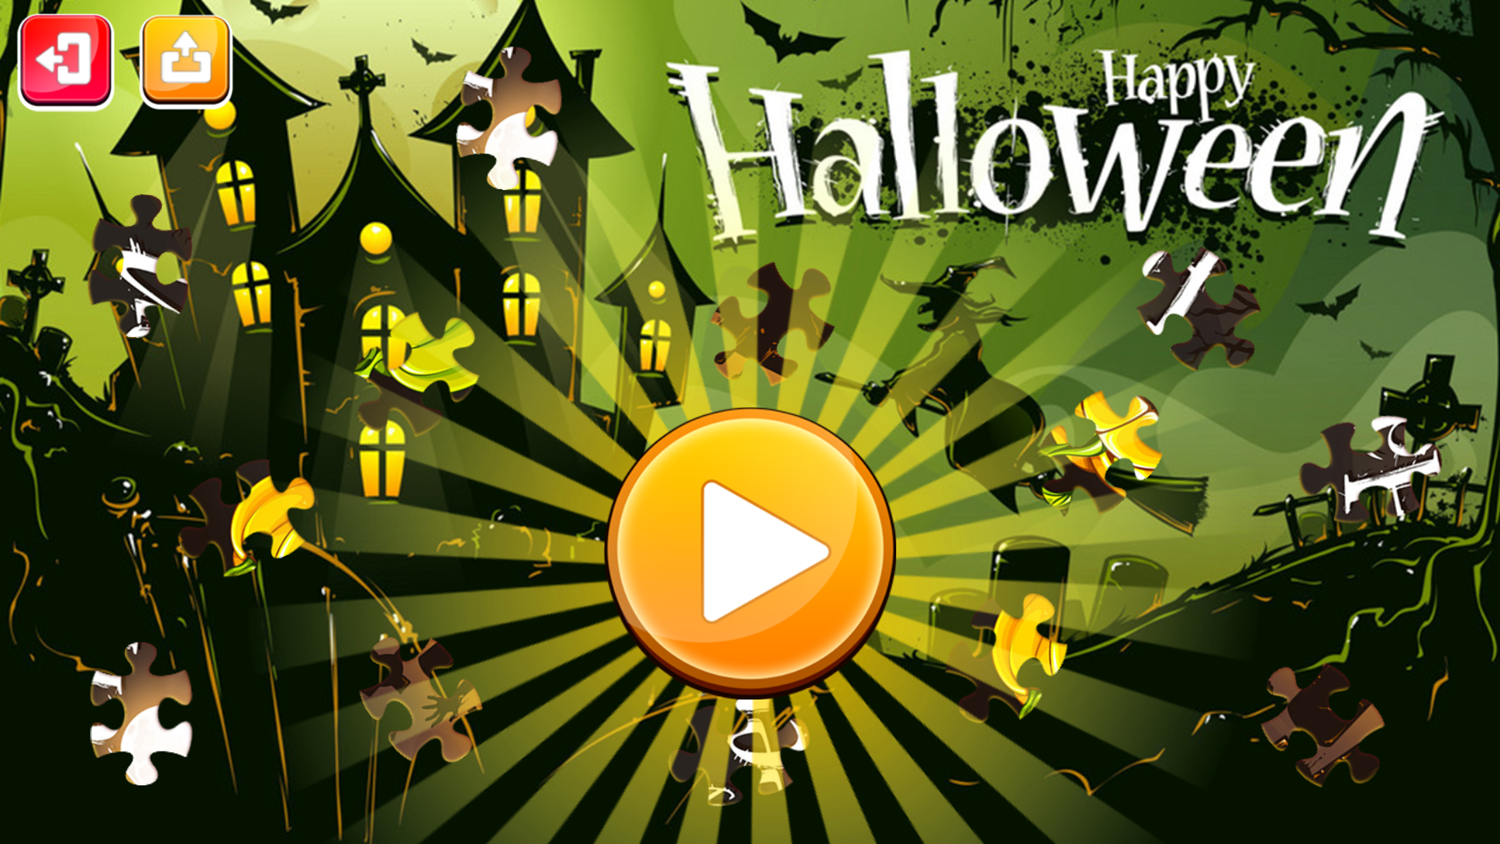 Happy Halloween Jigsaw Puzzle Game Welcome Screen Screenshot.